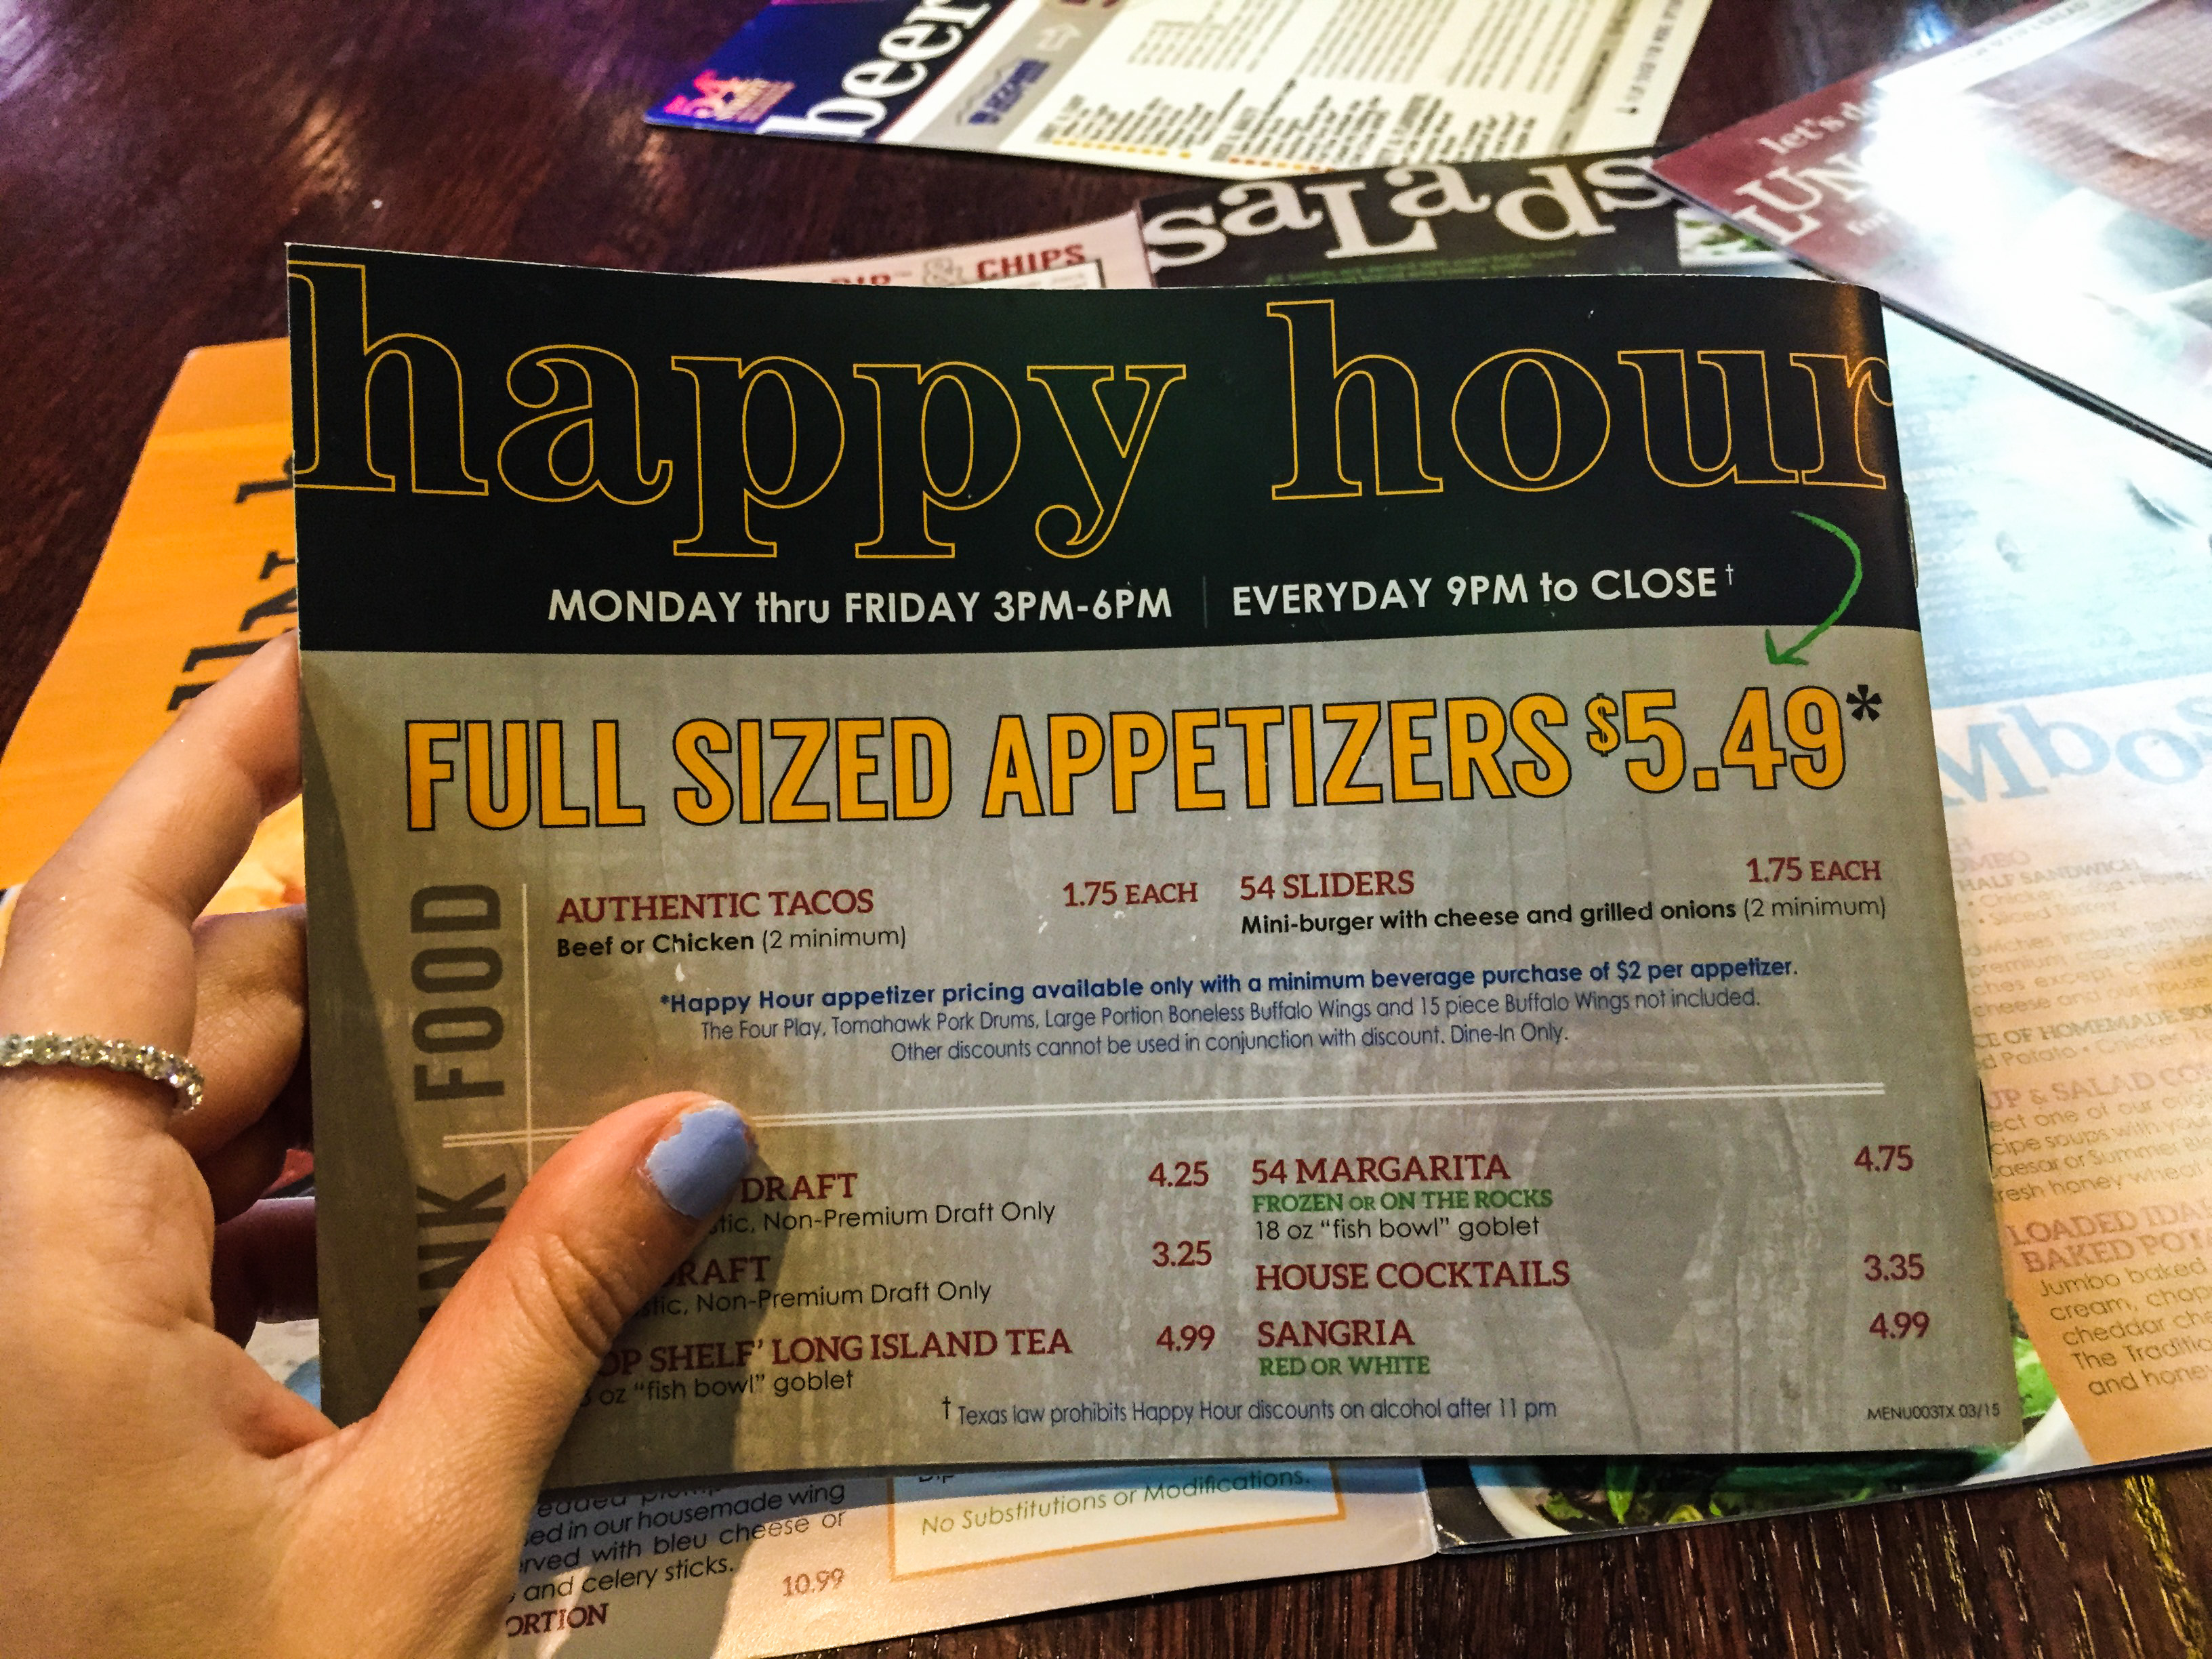 54th street happy hour menu
